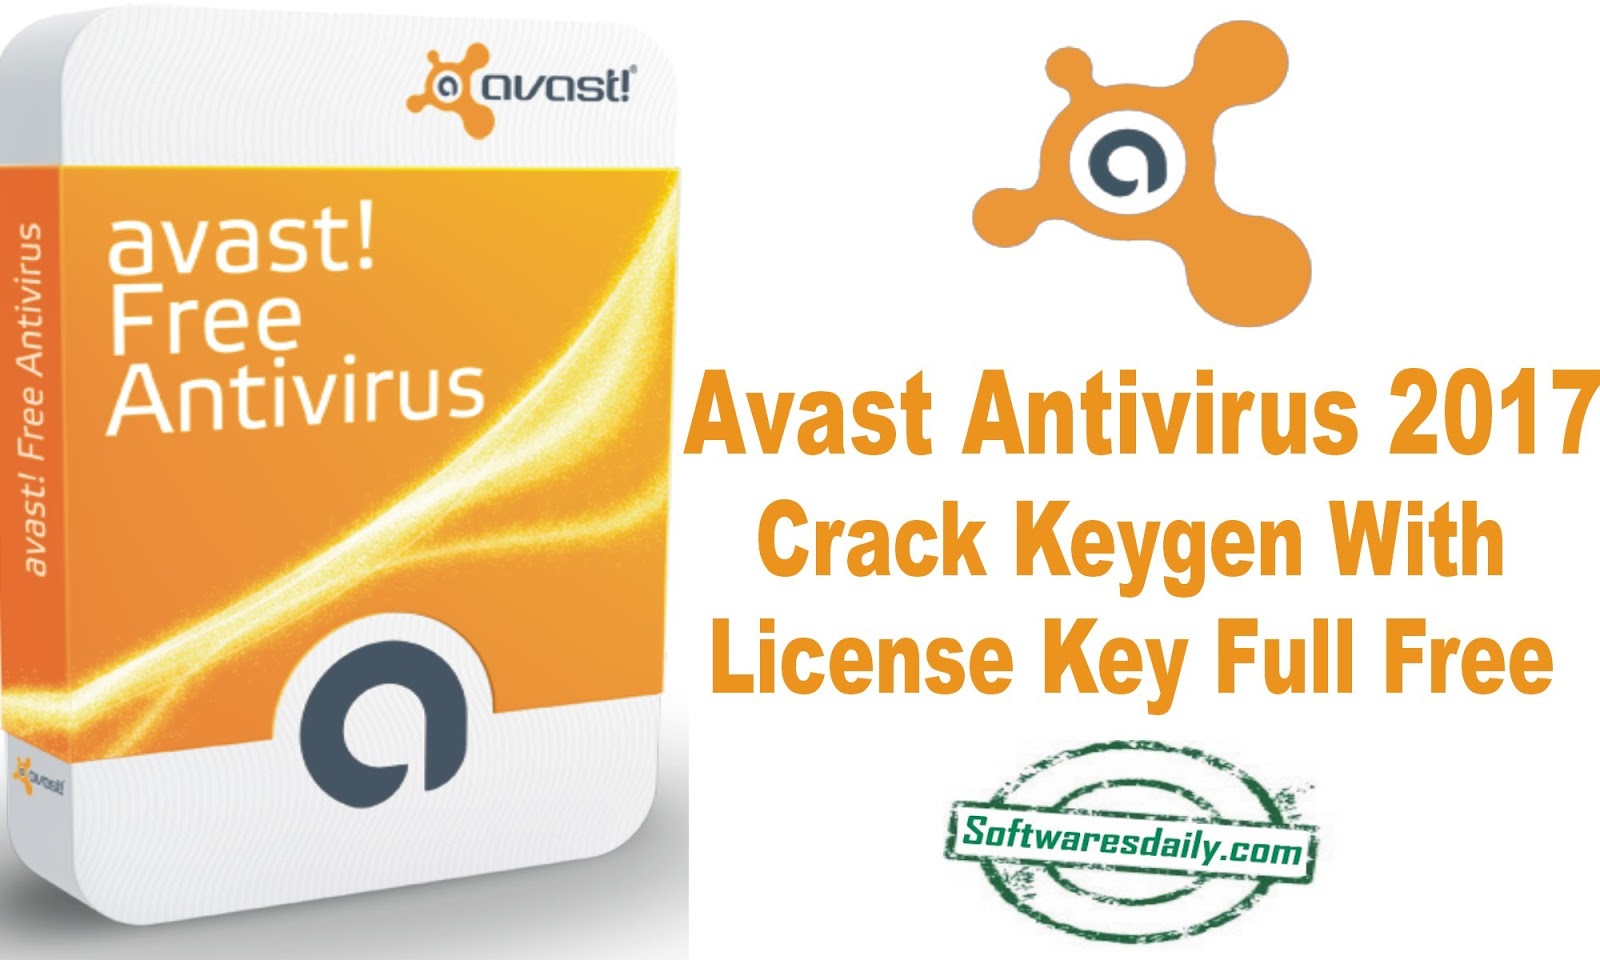 Avast free antivirus serial key